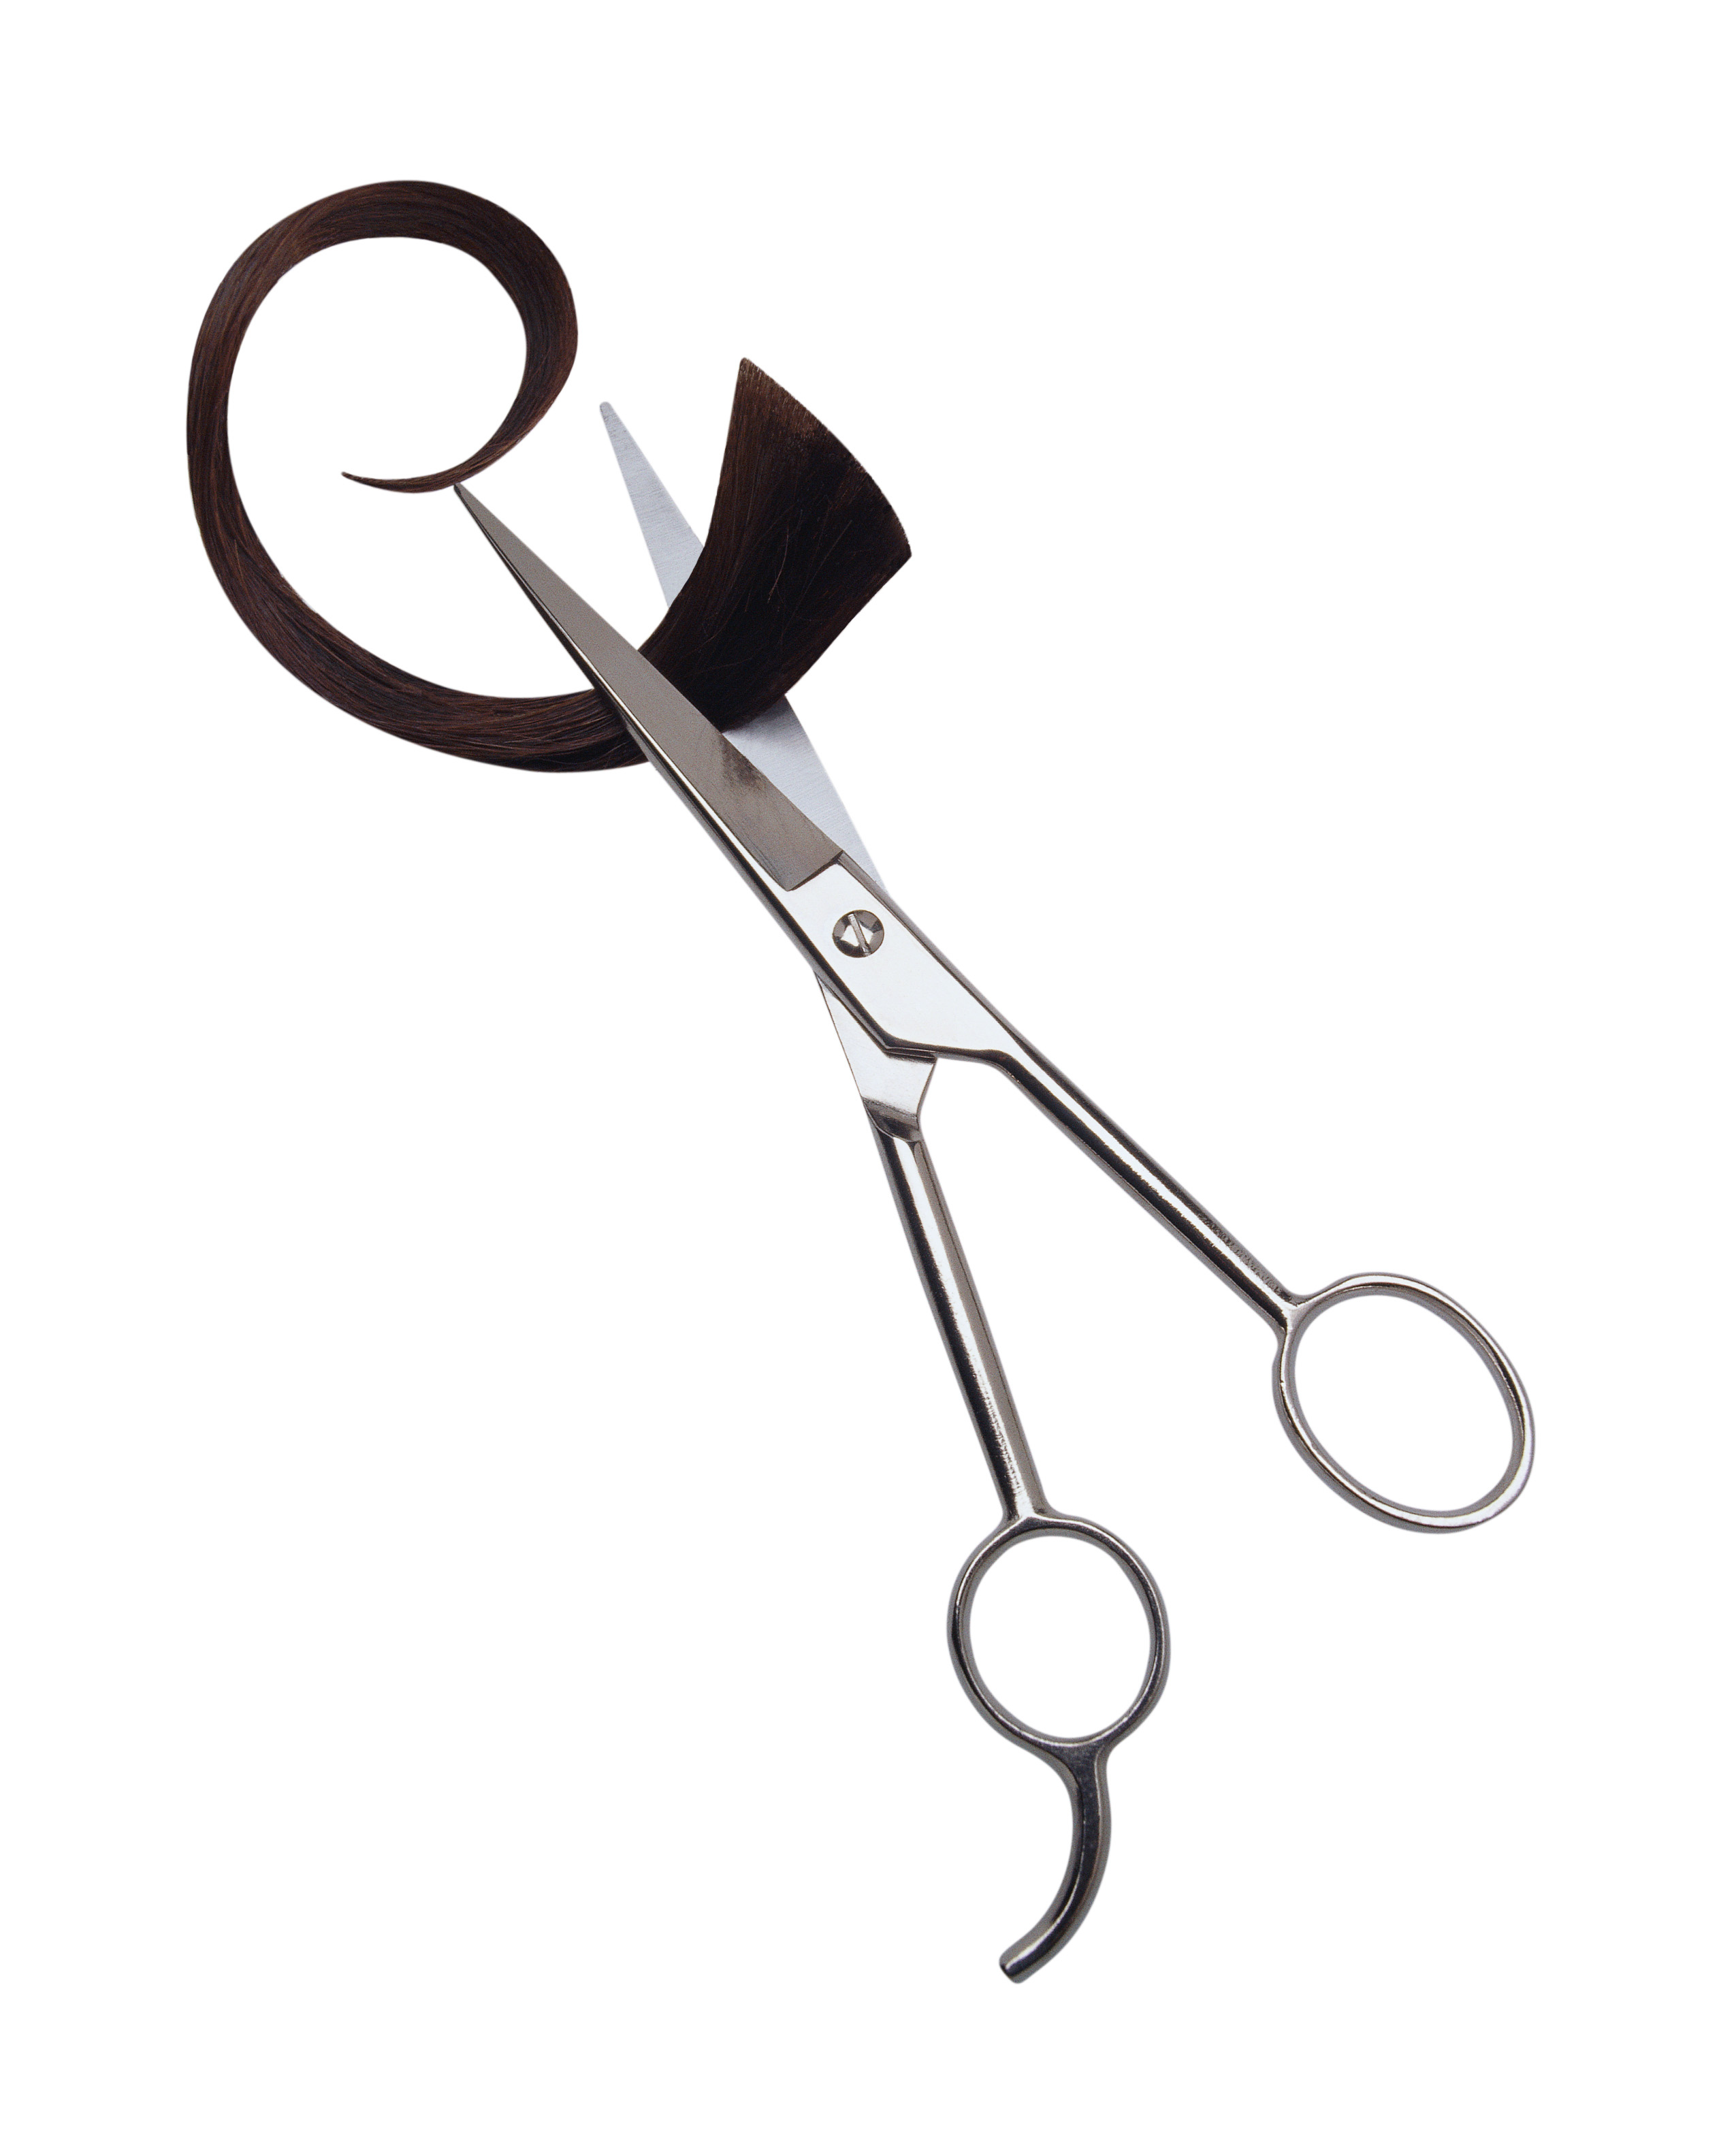 Hairdresser scissors clip art - ClipartFox